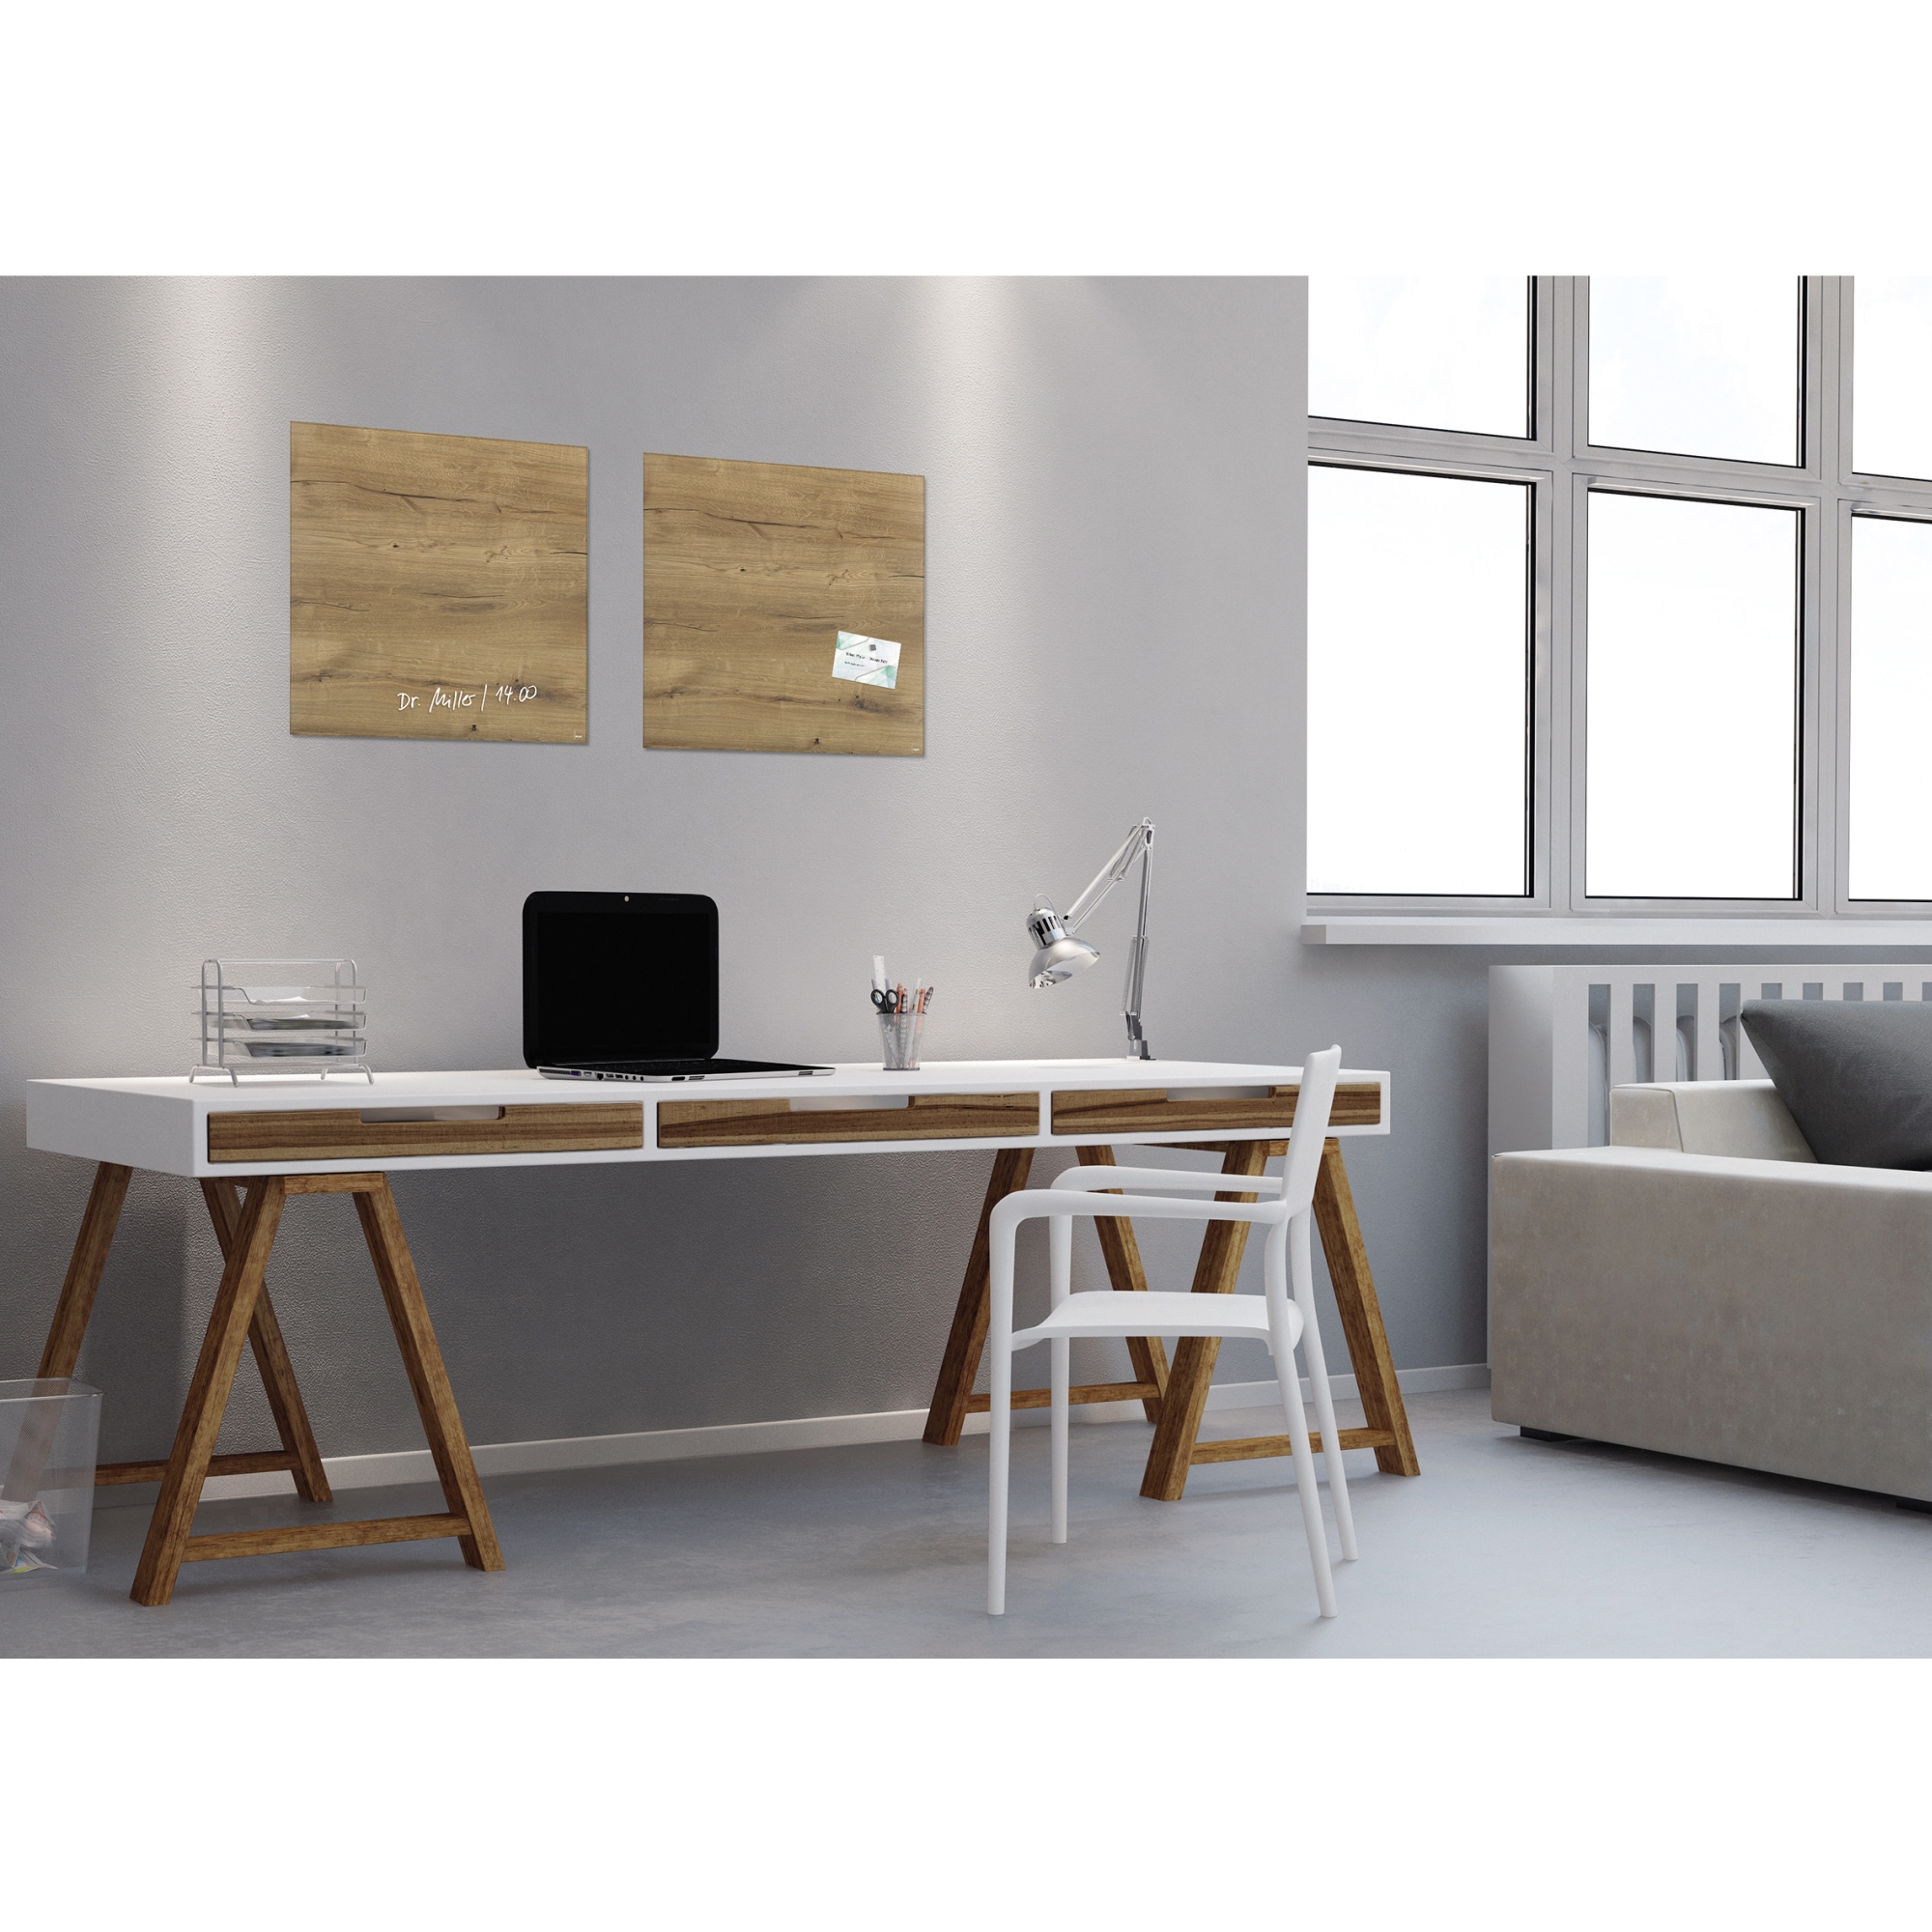 SIGEL Glasboard artverum® 48 x 48 cm design Natural-Wood, braun